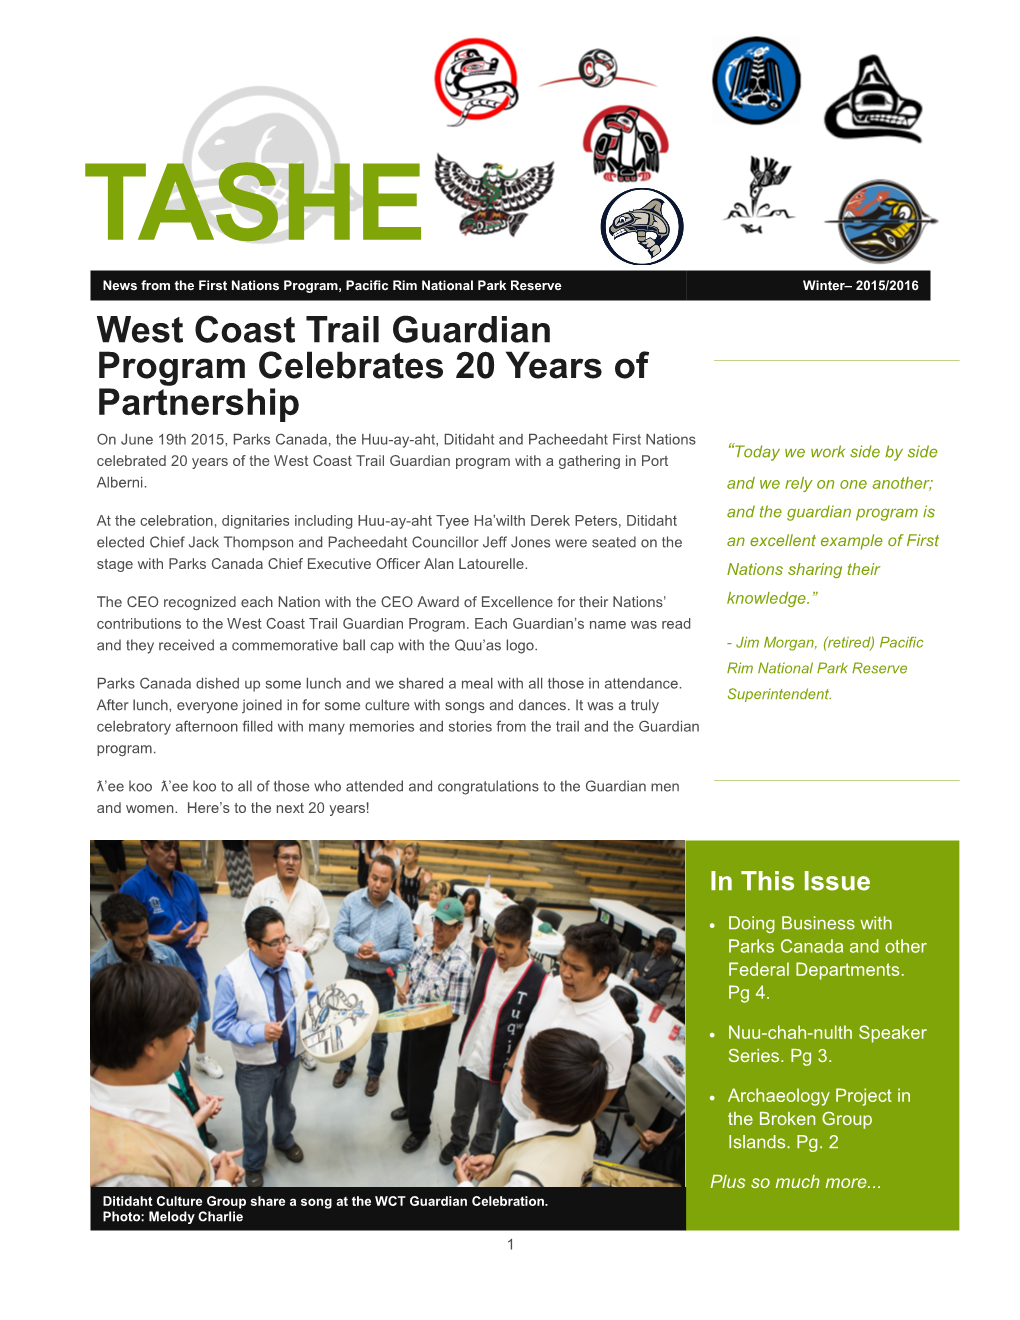 West Coast Trail Guardian Program Celebrates 20 Years